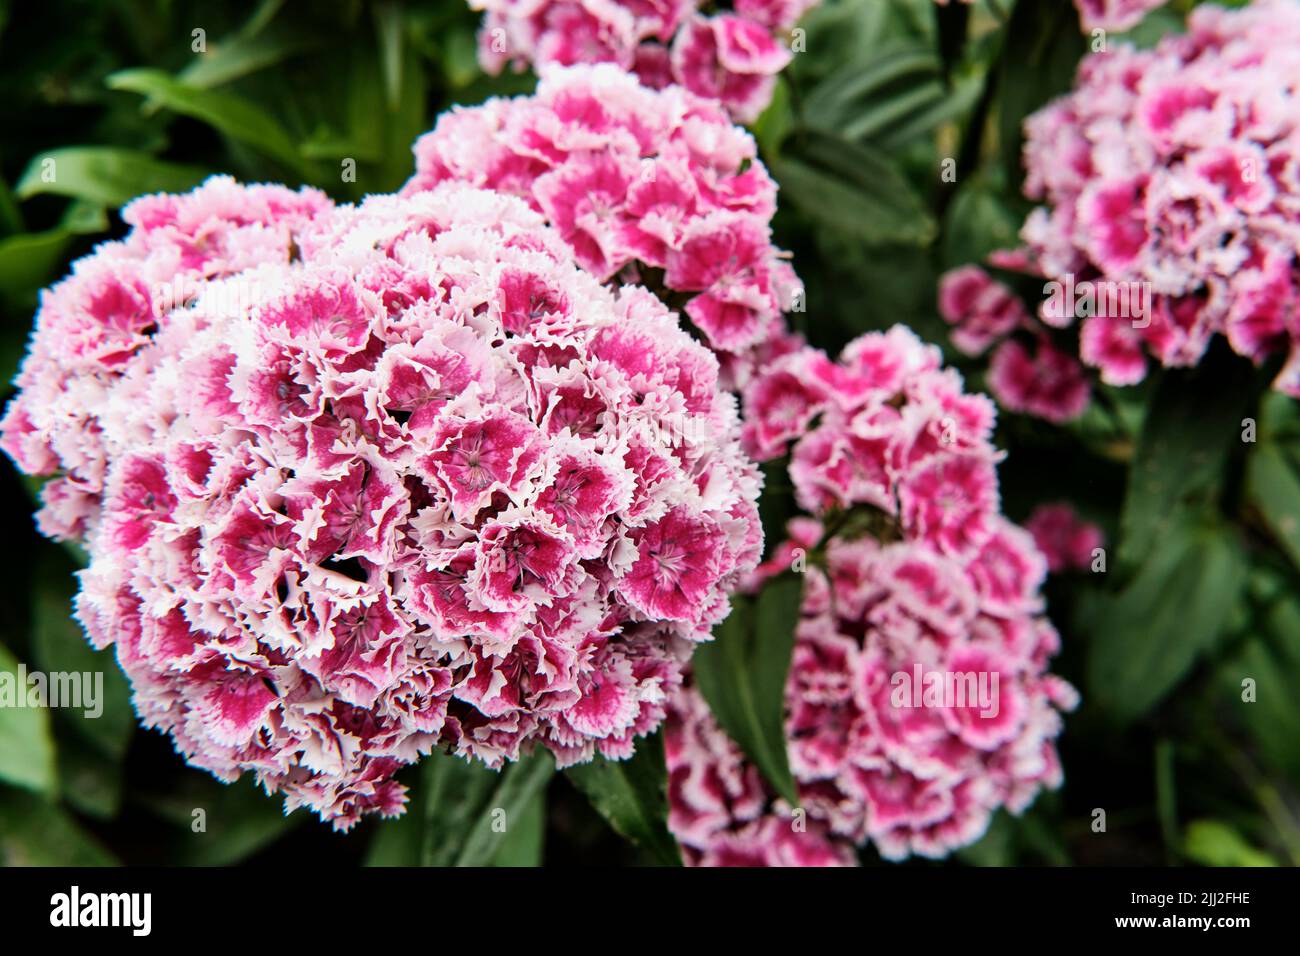 Flowering ornamental garden plant Turkish carnation, Sweet William. Close-up Stock Photo